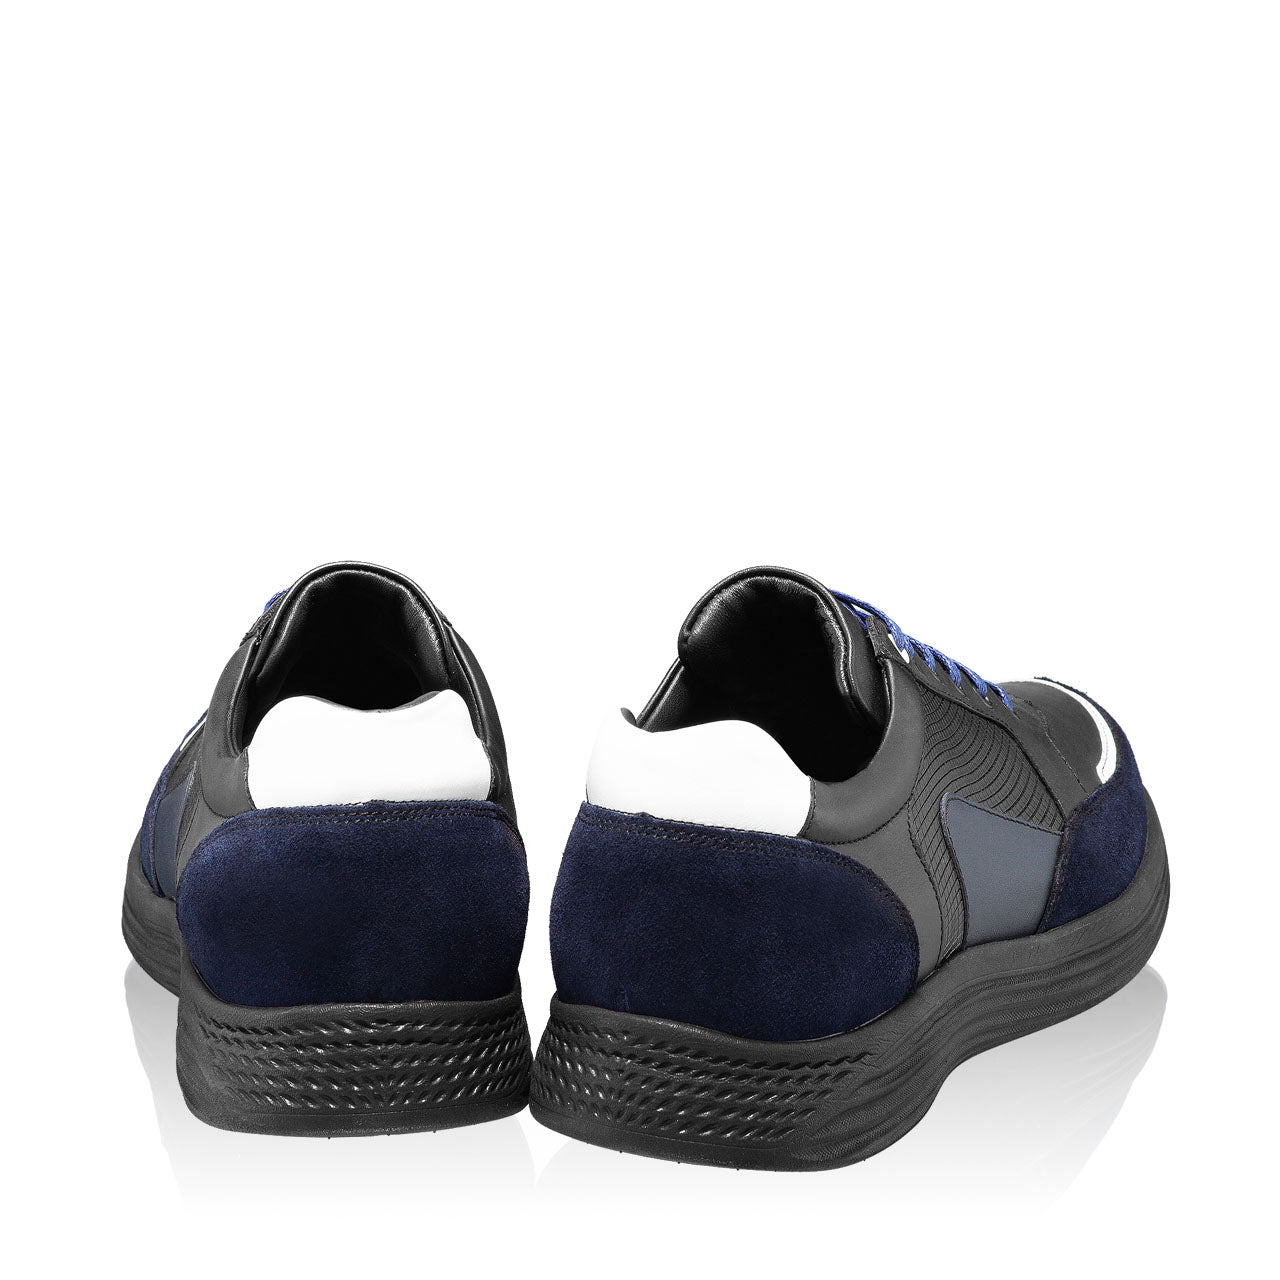 Pantofi casual barbati Zenith negru-albastru